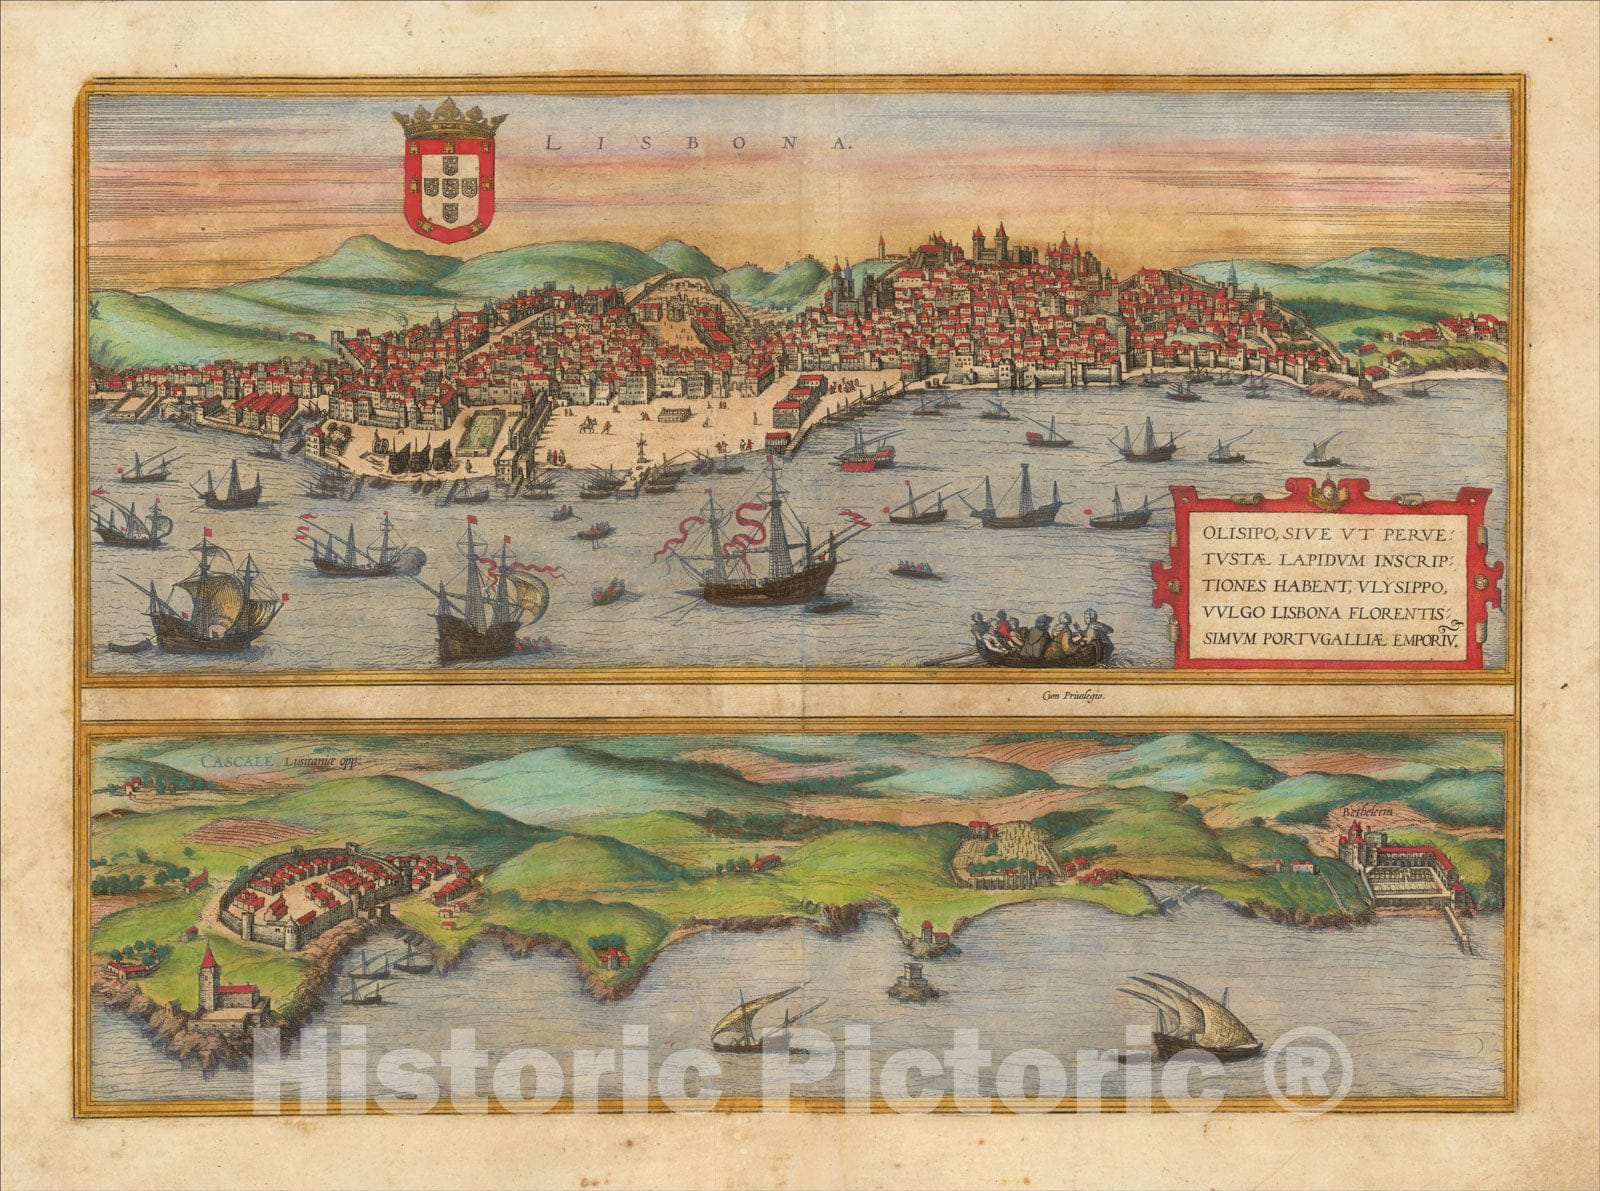 Historic Map : Lisbona. Olisipo, vulgo Lisbona Florentissimum Portugalliae Emporiu. with Cascale Lusitaniae Opp, c1572, , Vintage Wall Art